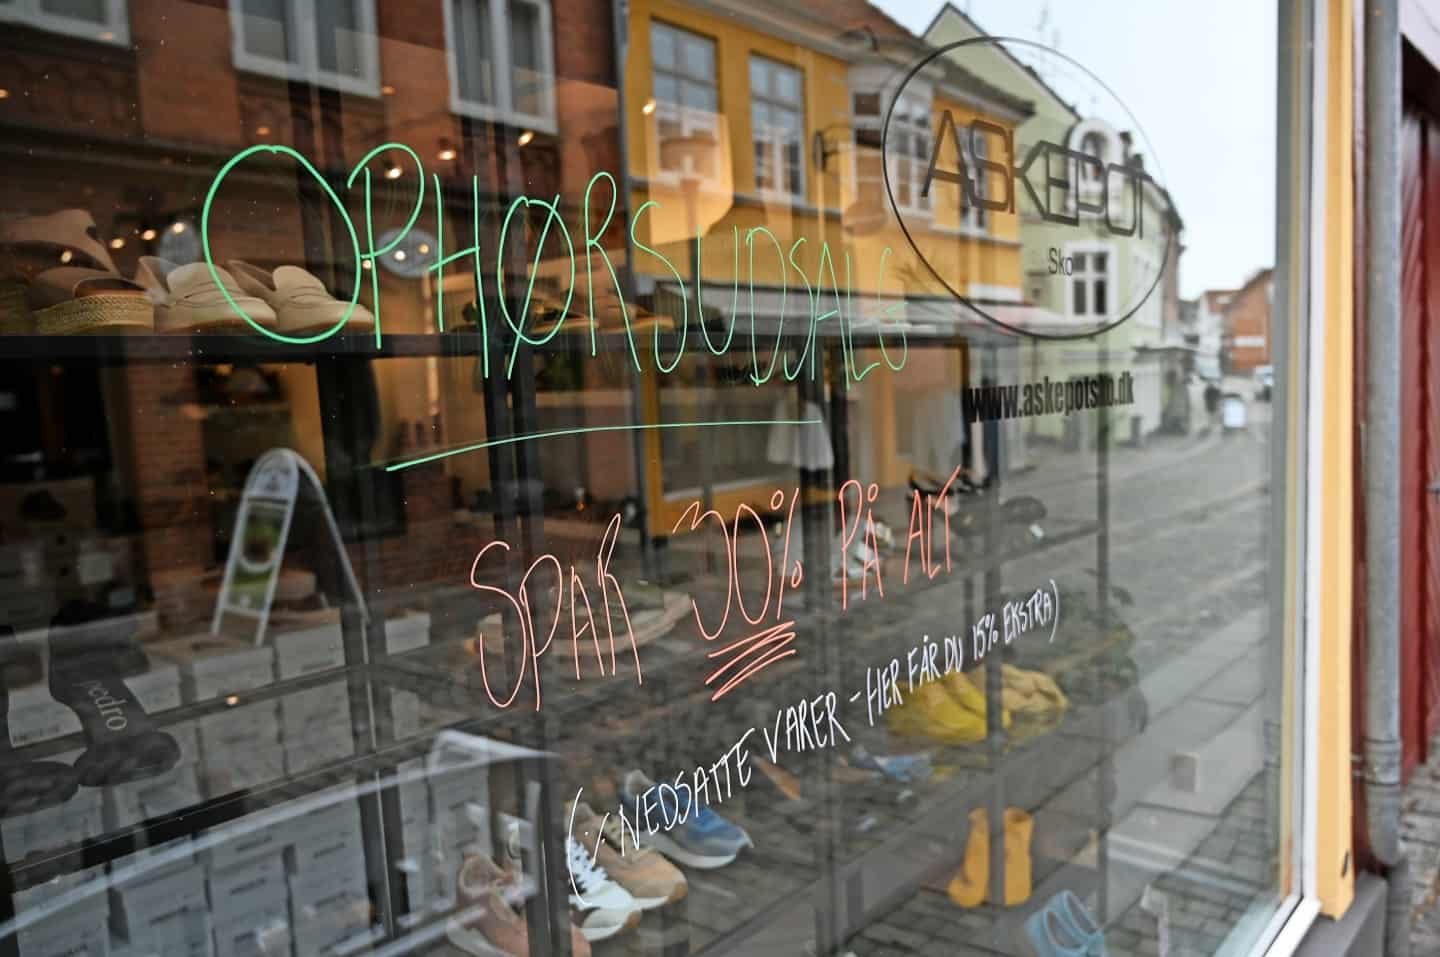 For måneder siden bekymret over manglende opbakning: Nu lukker hun sin skobutik i Svendborg | faa.dk